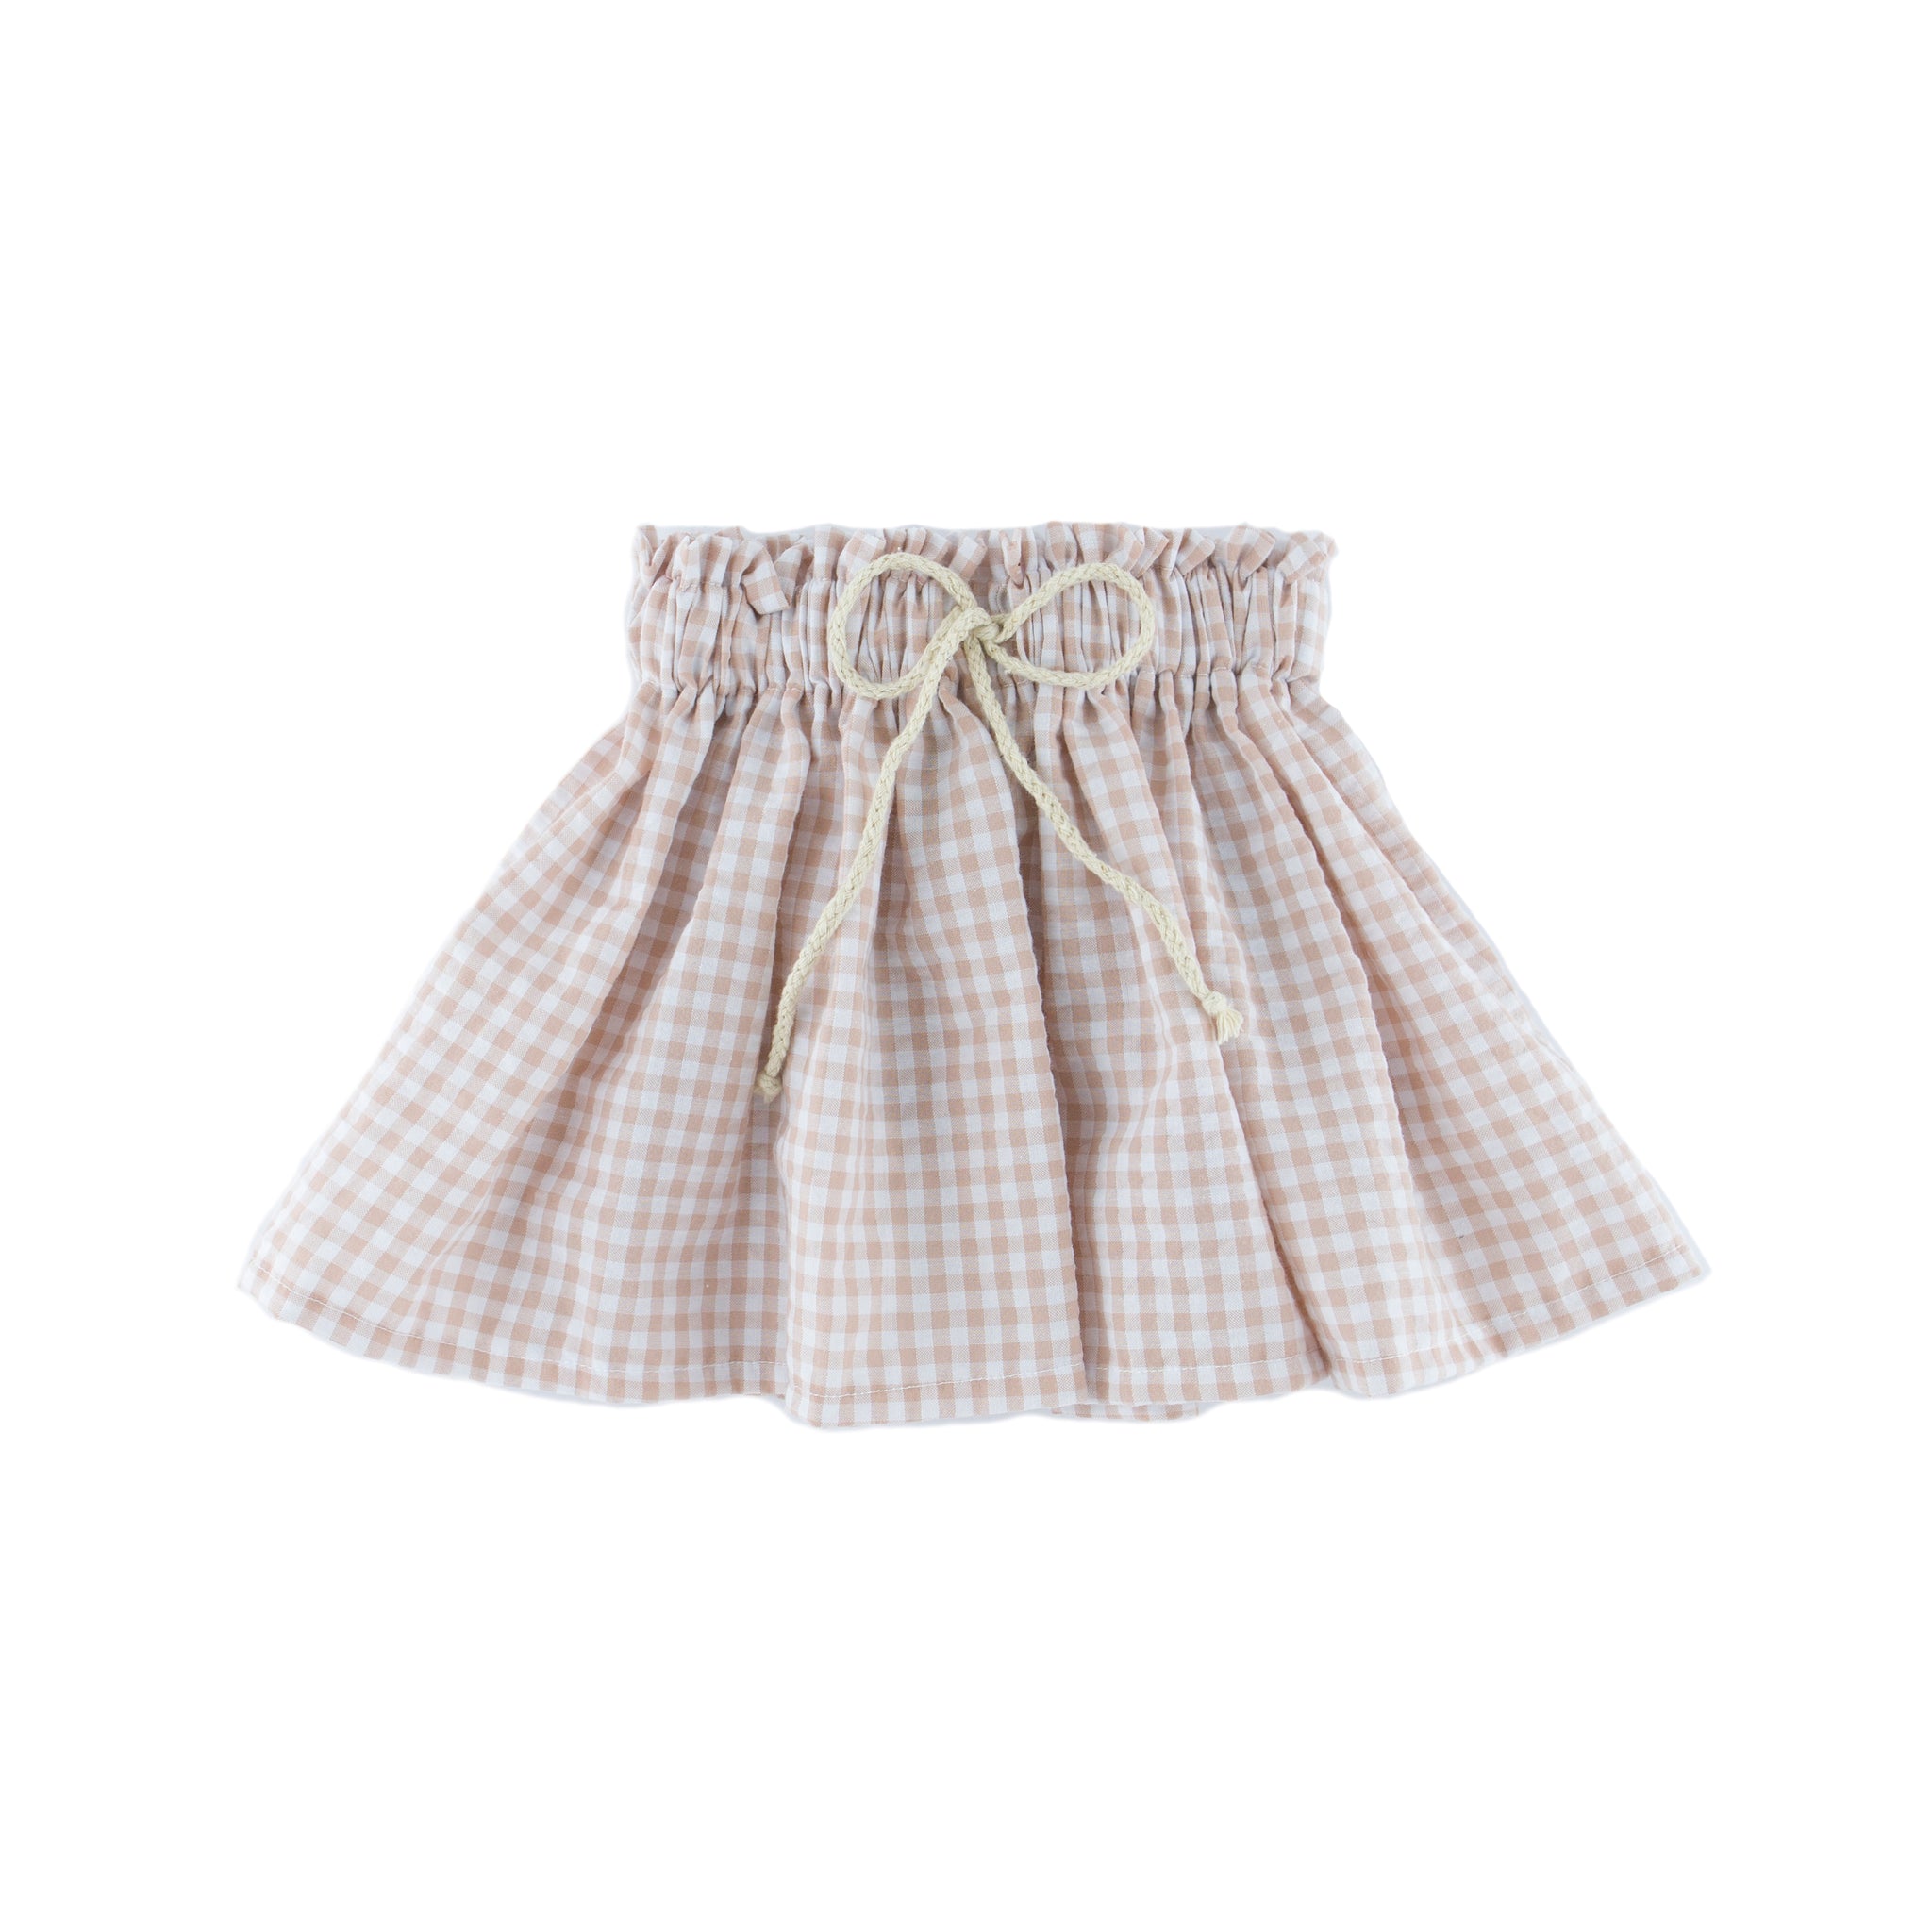 Sienna skirt - checkered soft pink